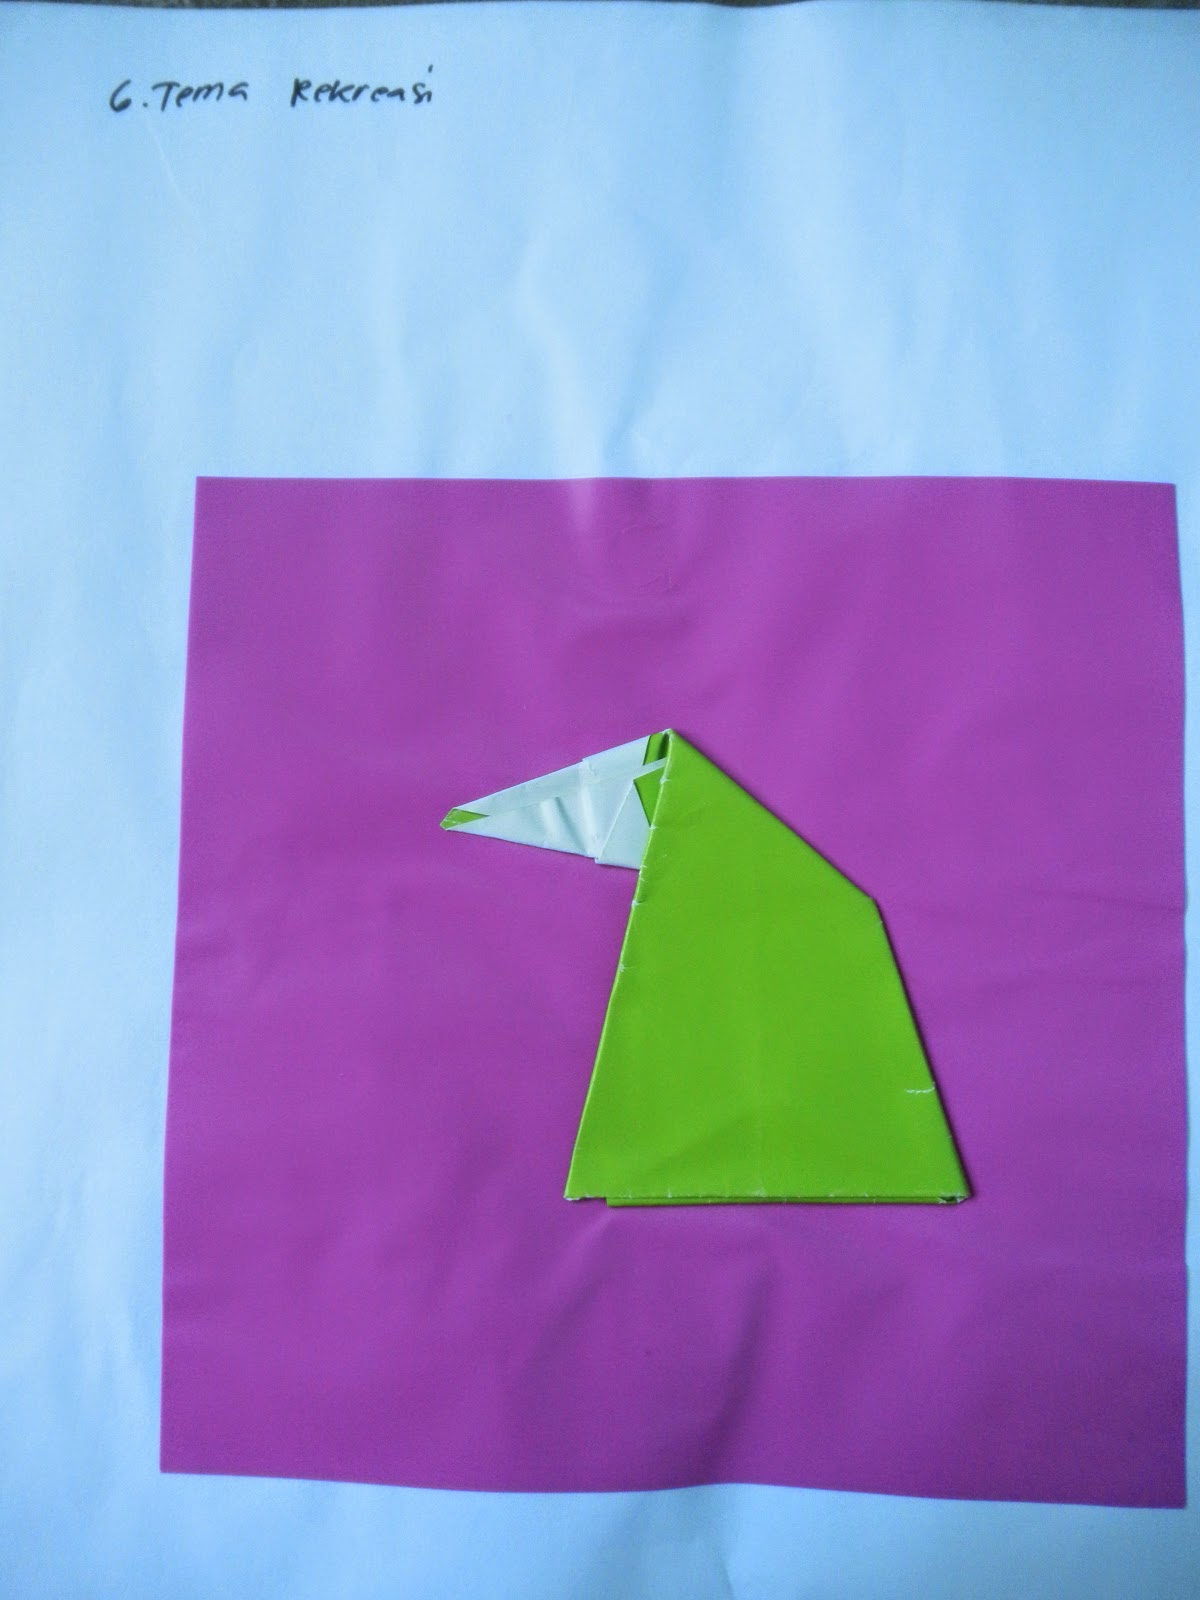 Contoh origami (melipat kertas) untuk PAUD berdasarkan 